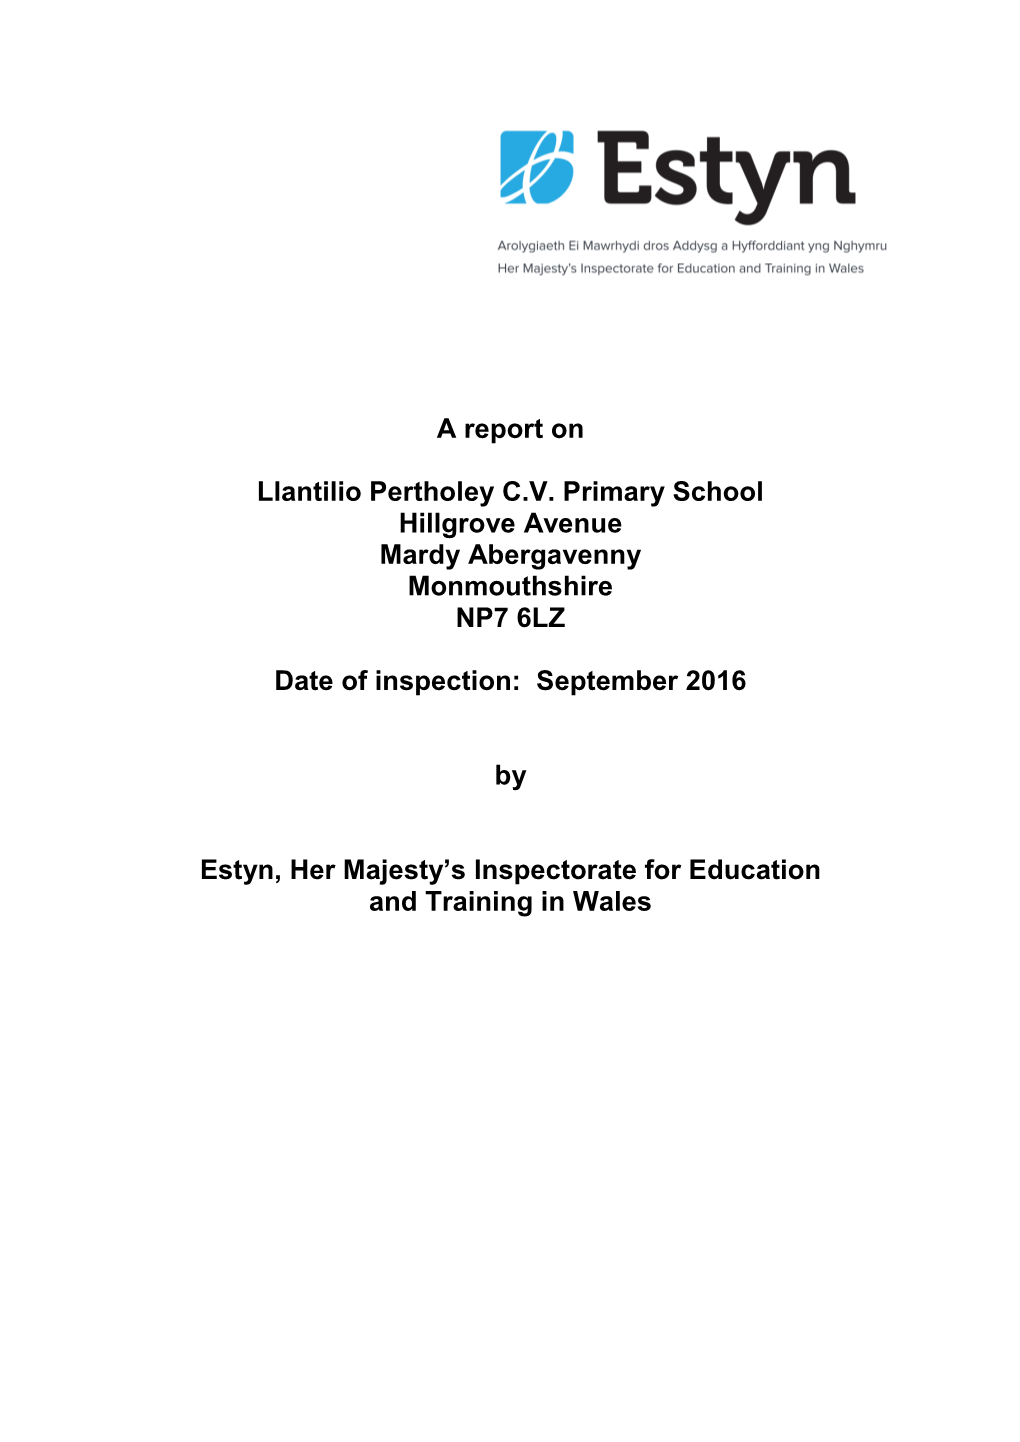 Inspection Report Llantilio Pertholey CV